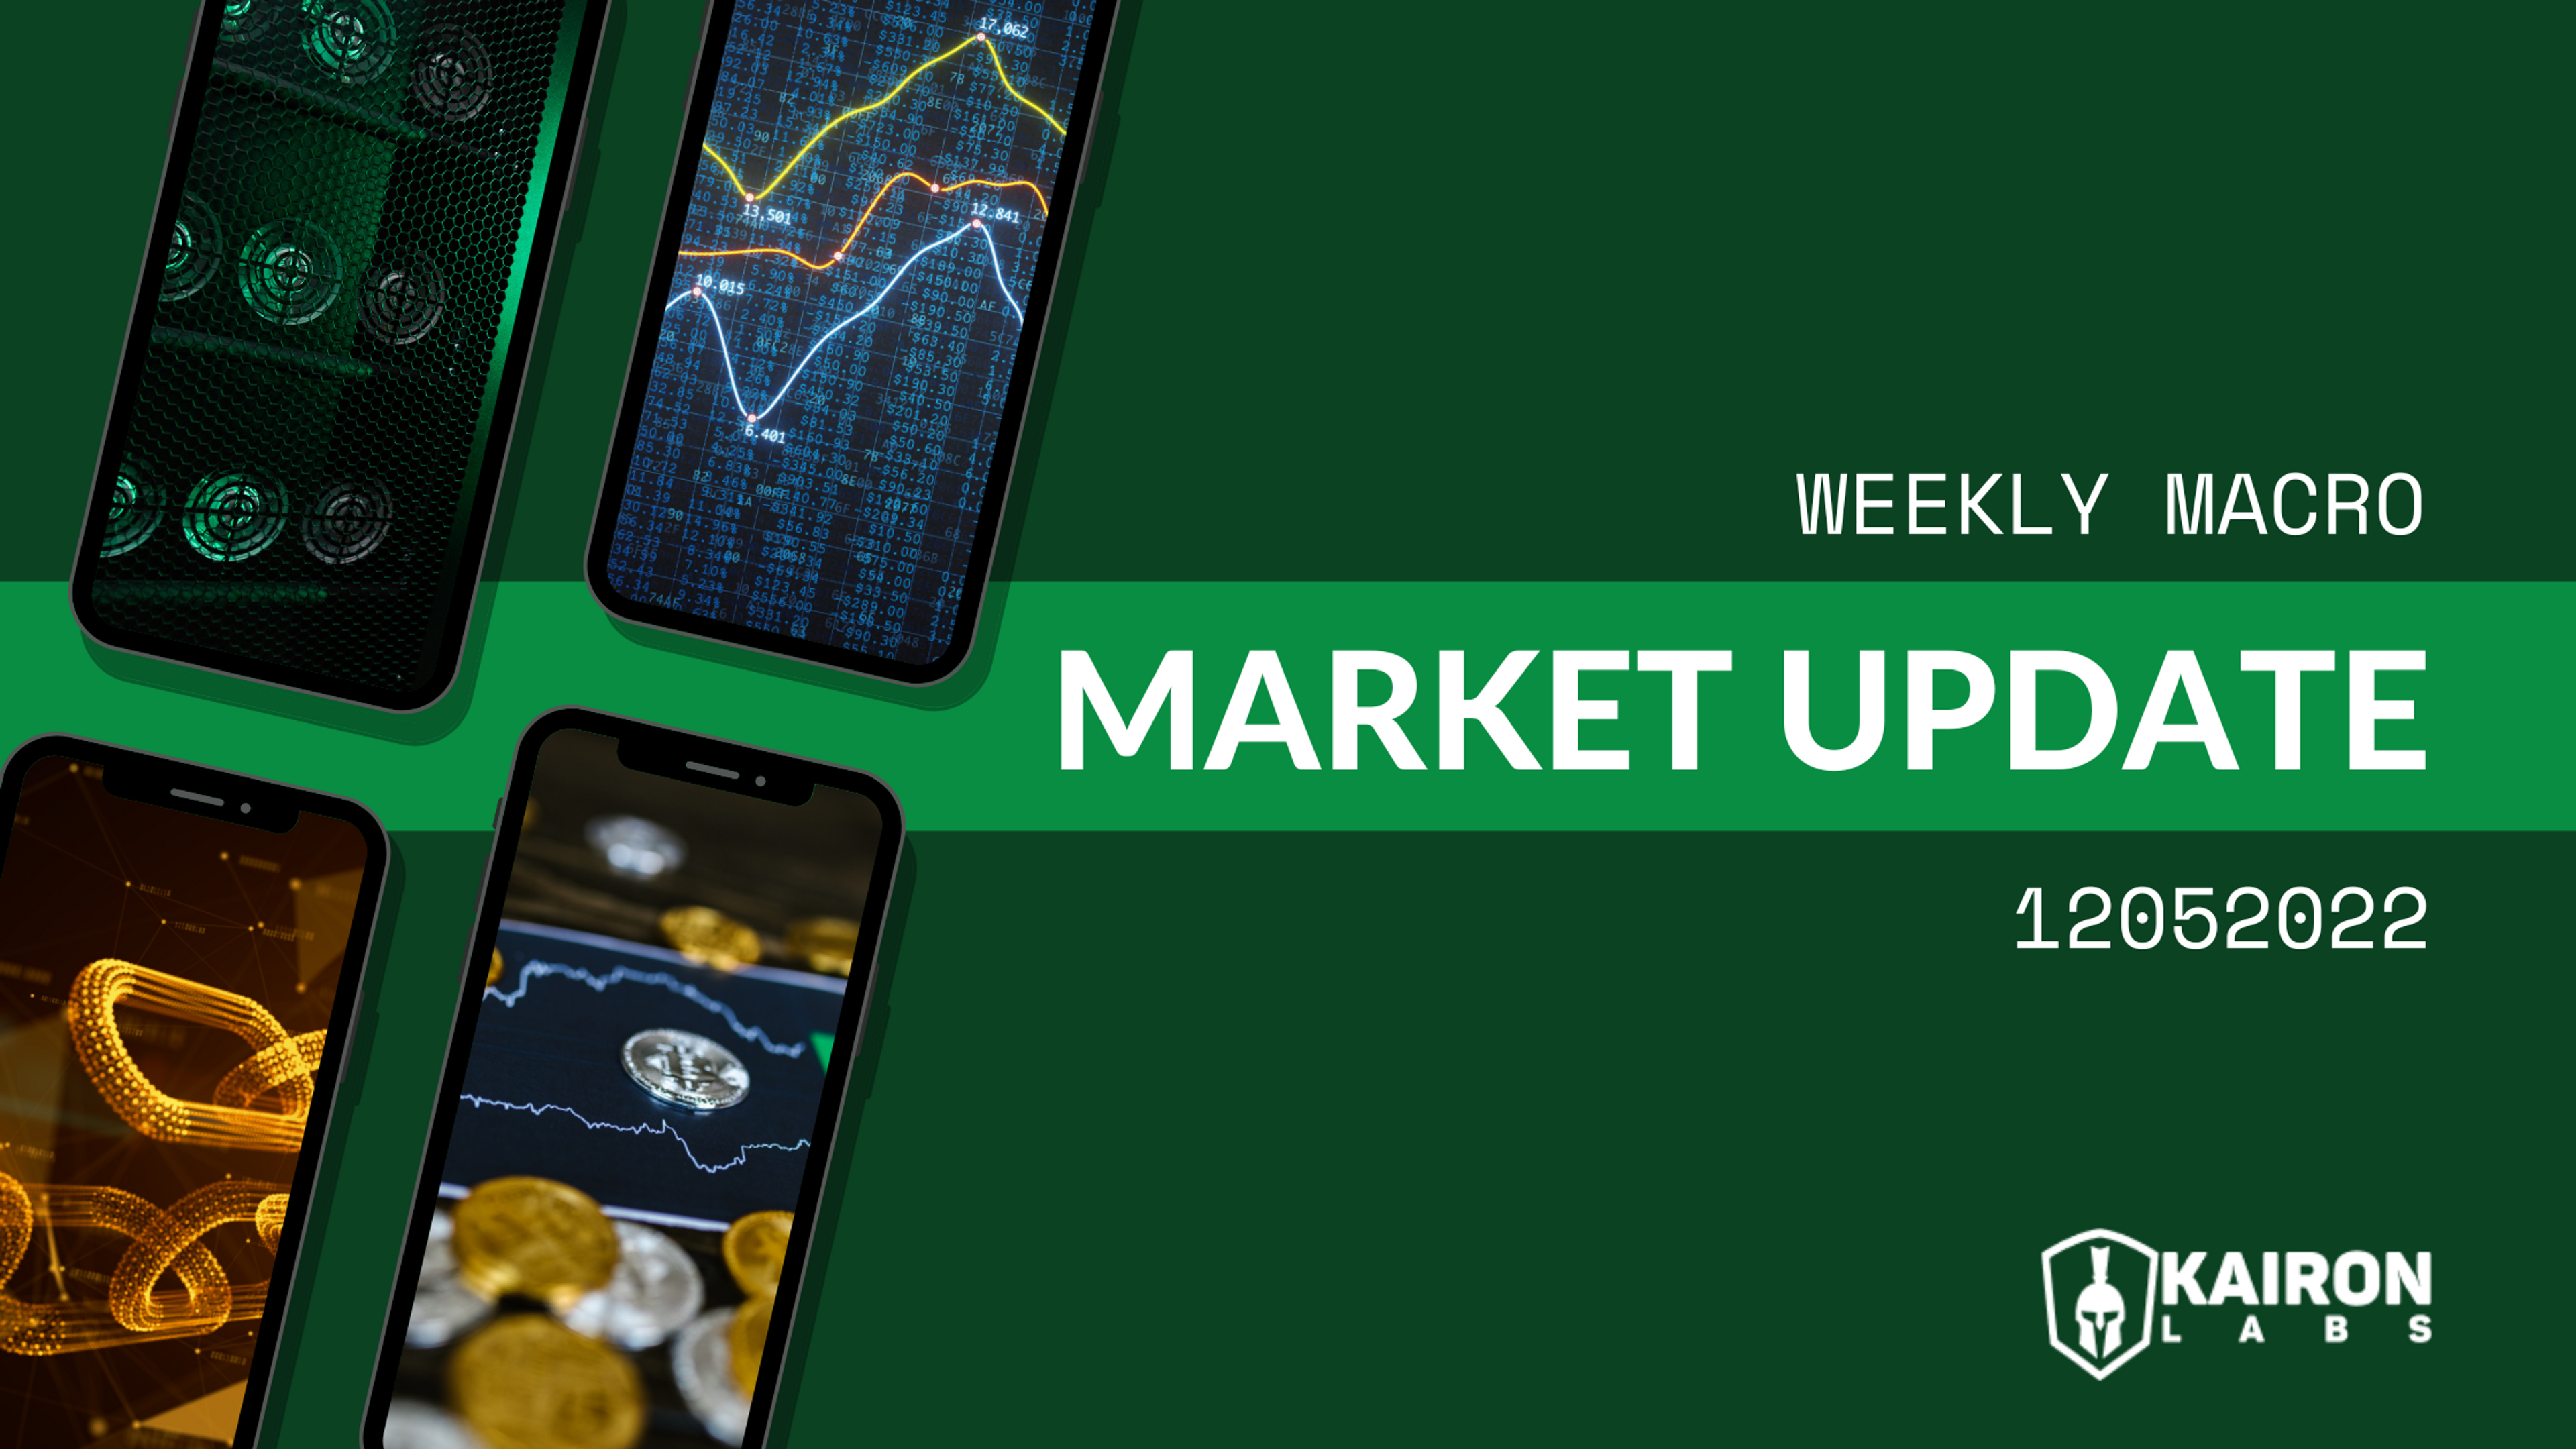 Weekly Macro Market Update - Dec 5, 2022